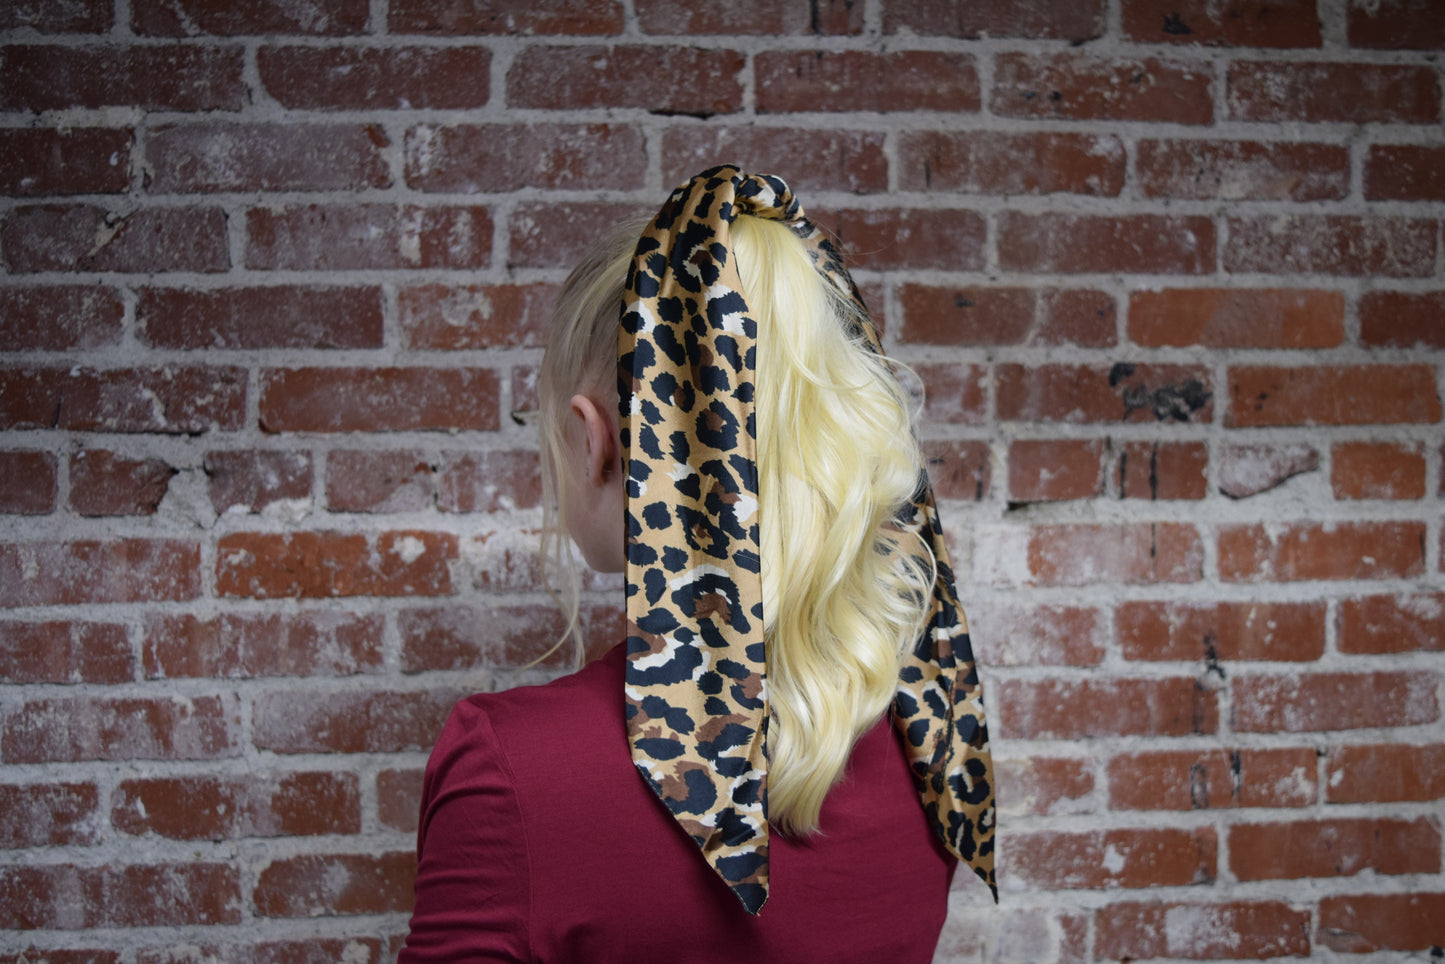 Leopard Scrunchie Scarf (two colors)